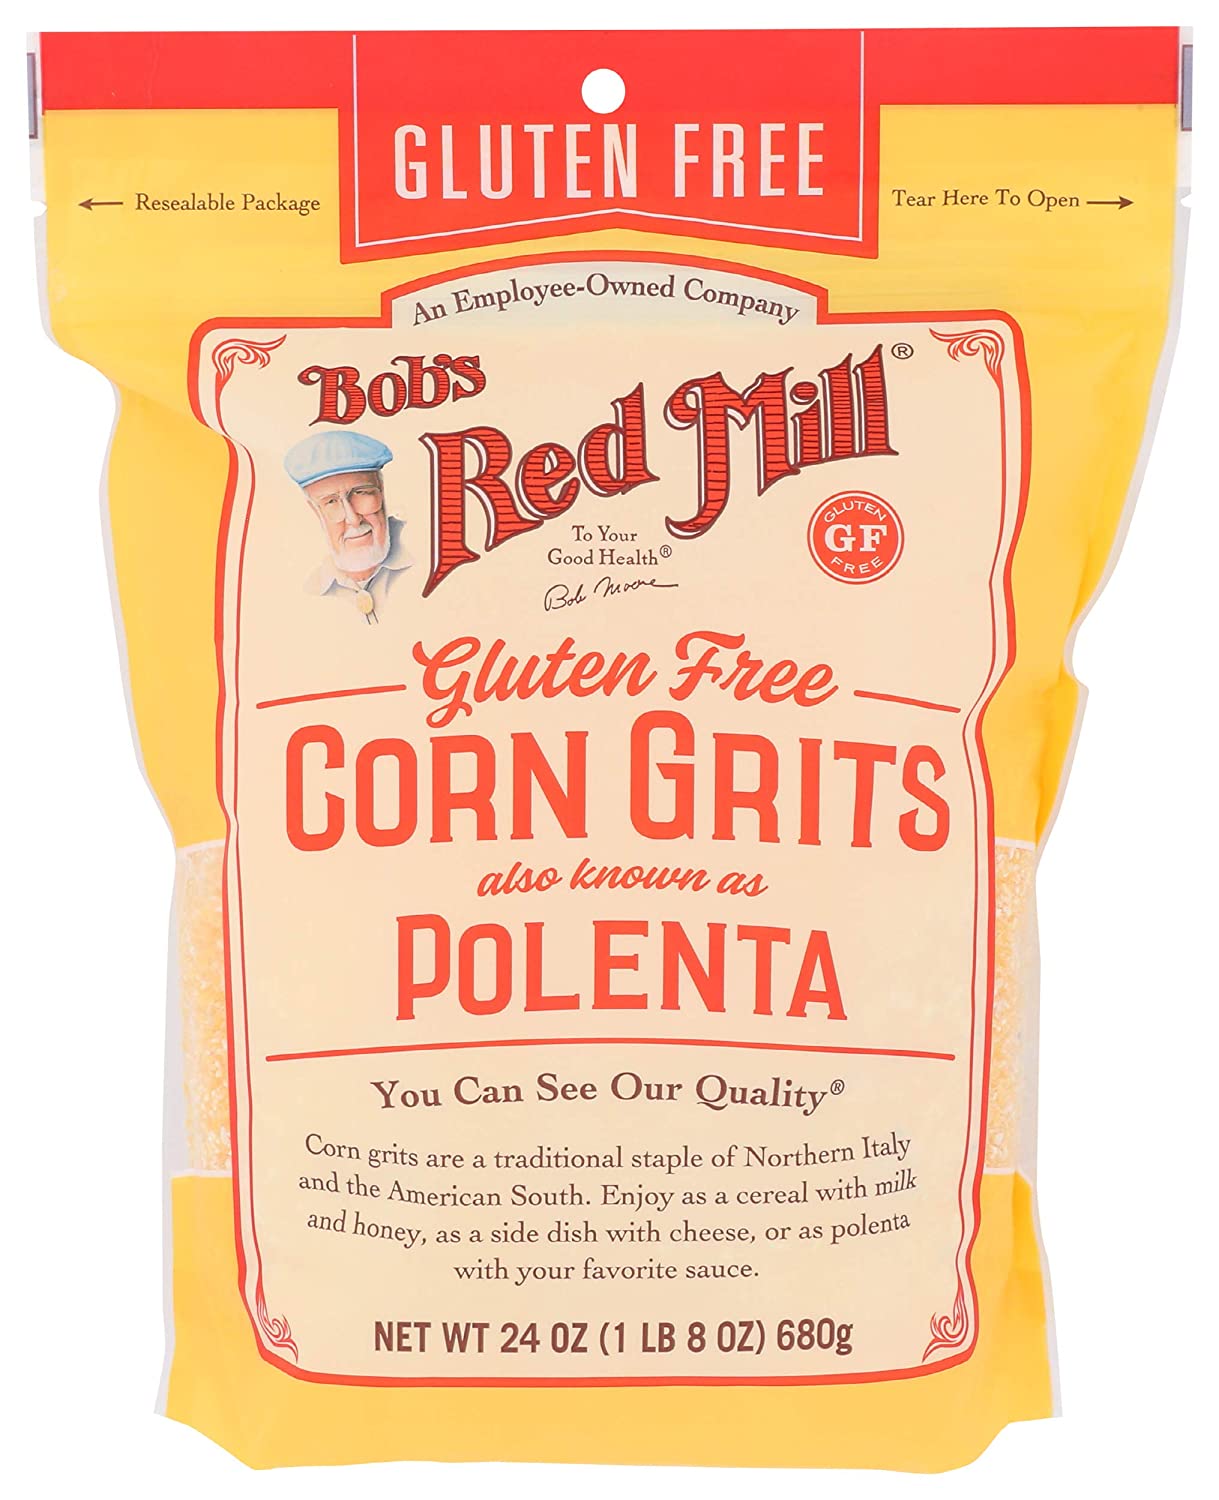 Gluten Free Corn Grits Polenta Bobs Red 24oz 4pack